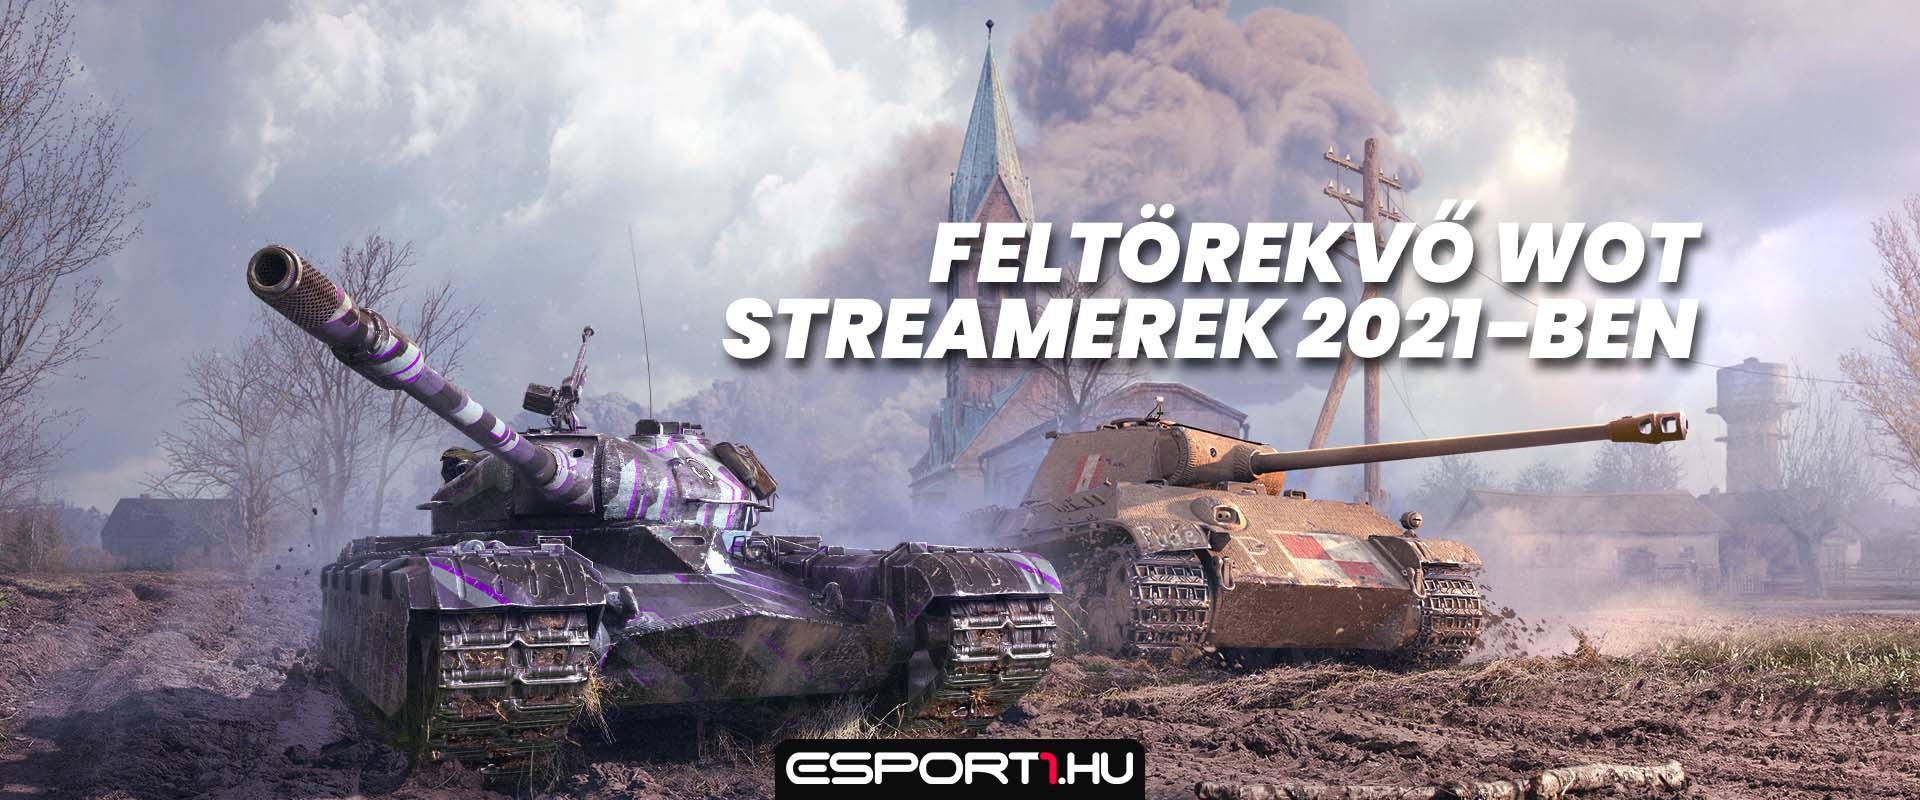 2021 feltörekvő magyar World of Tanks streamerei